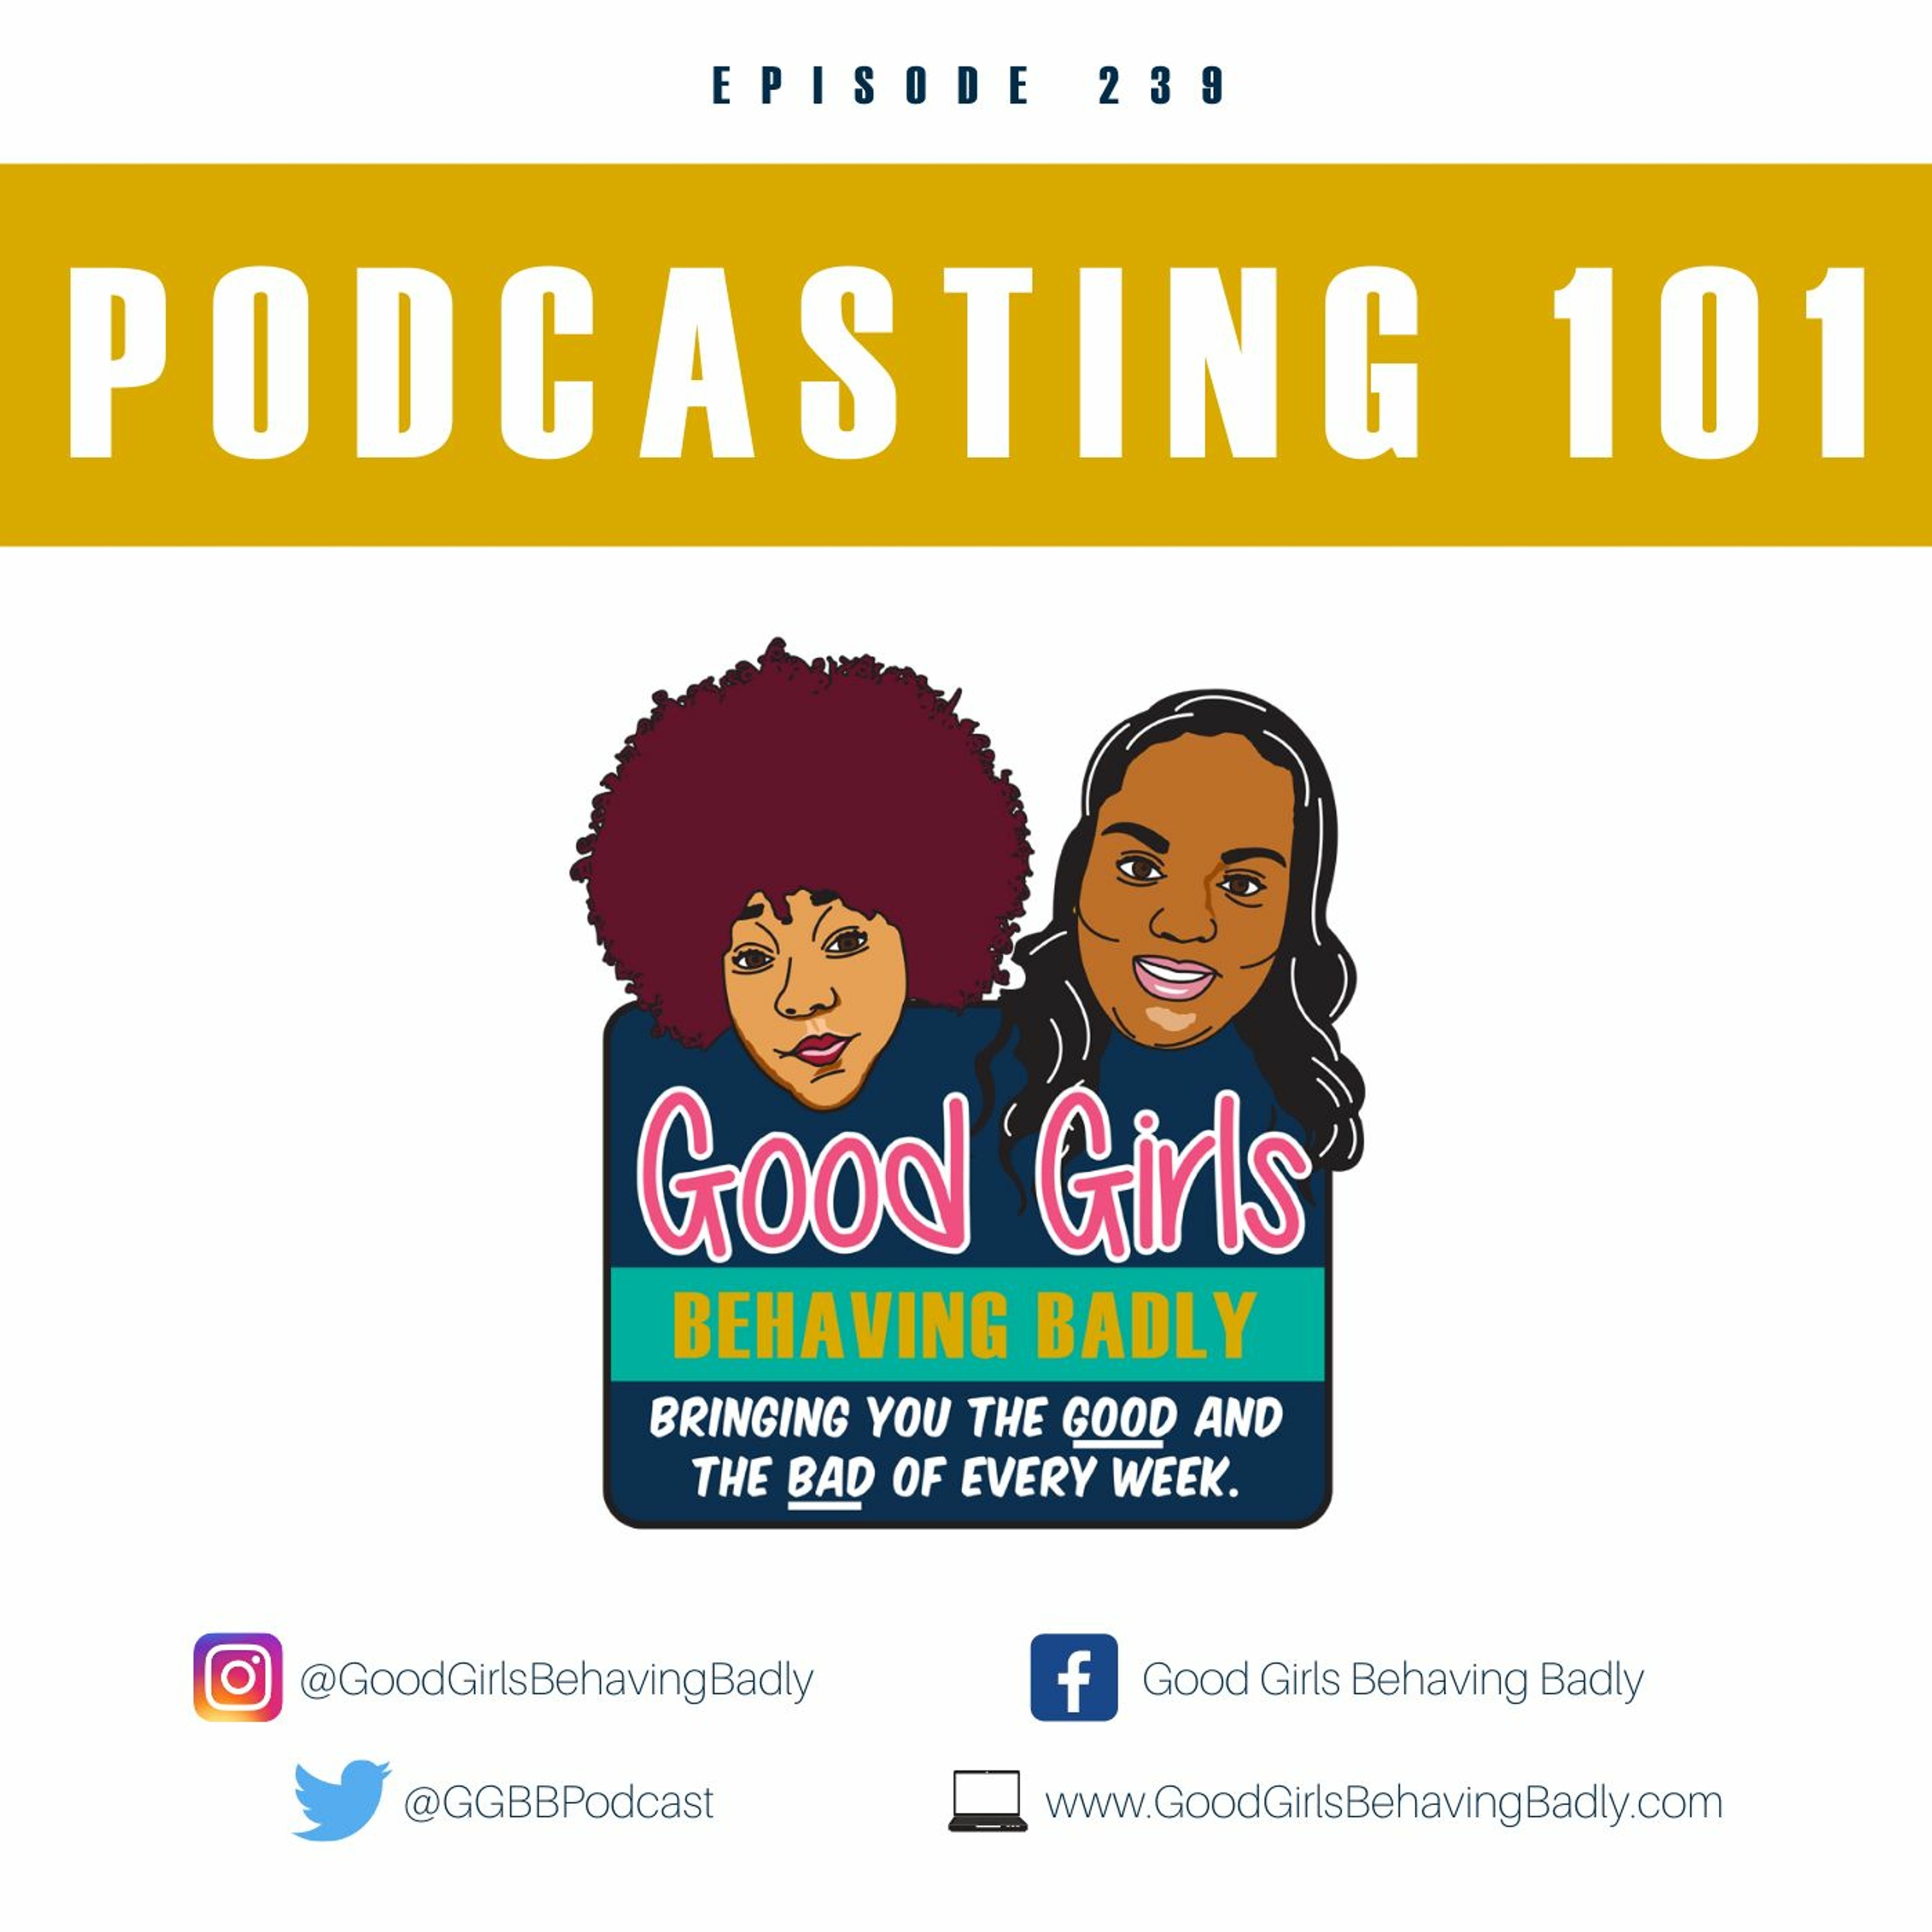 Episode 239: Podcasting 101